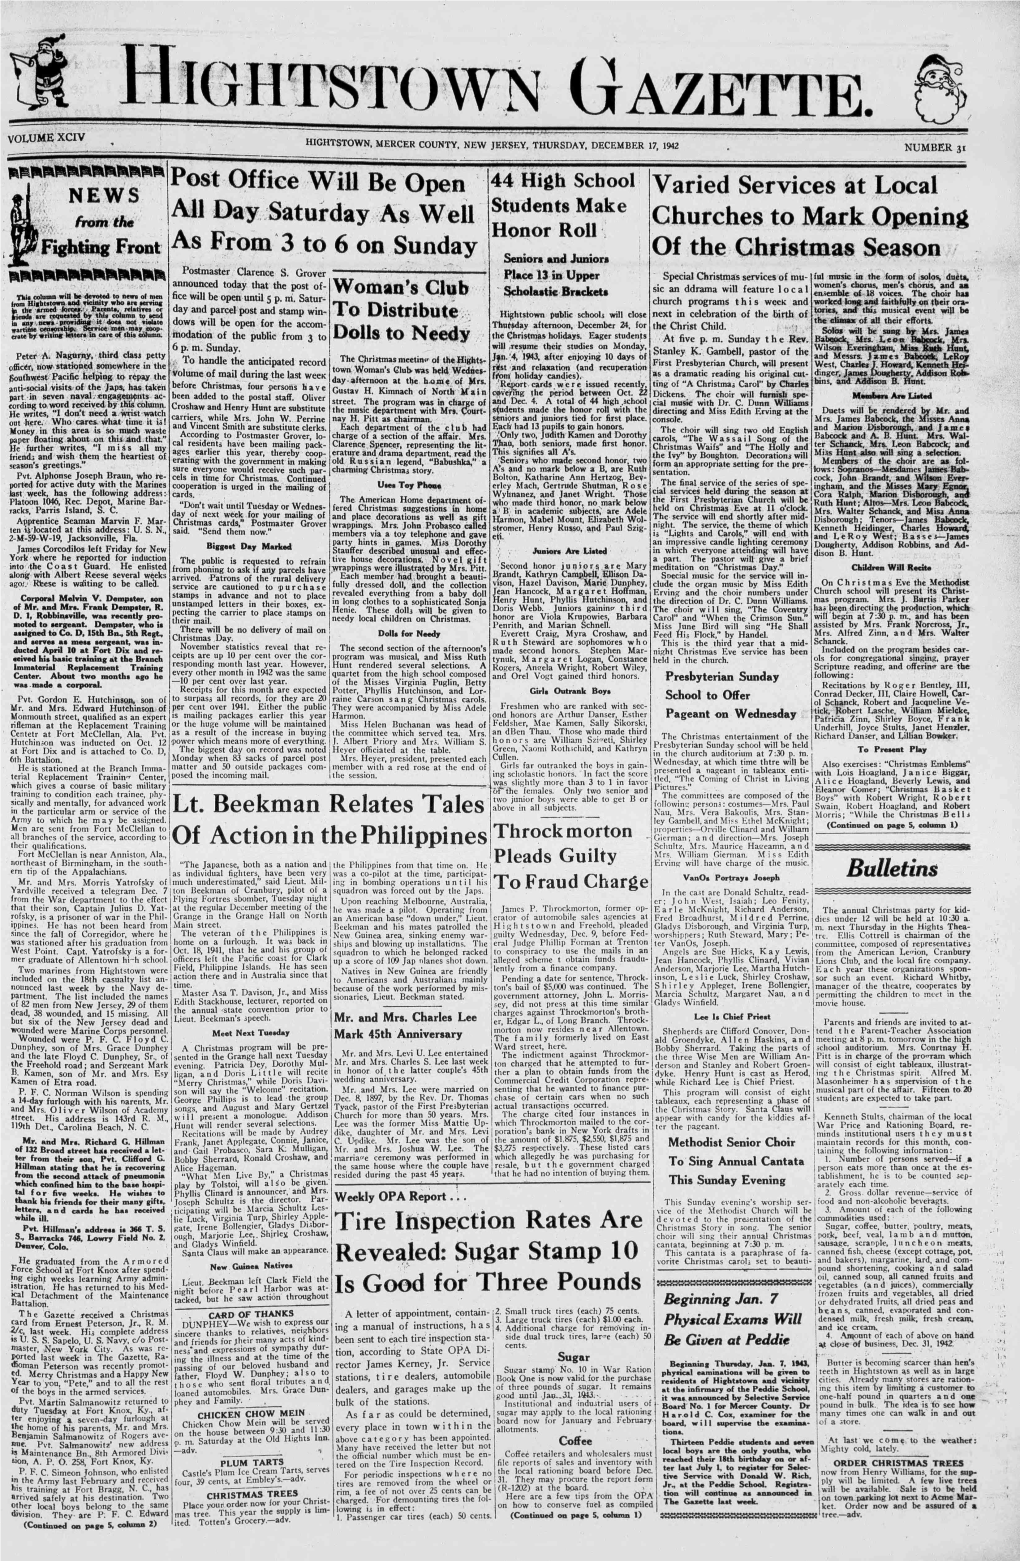 Hightstown Gazette. VOLUME X Crv HIGHTSTOWN, MERCER COUNTY, NEW JERSEY, THURSDAY, DECEMBER 17, 1942 NUMBER 31